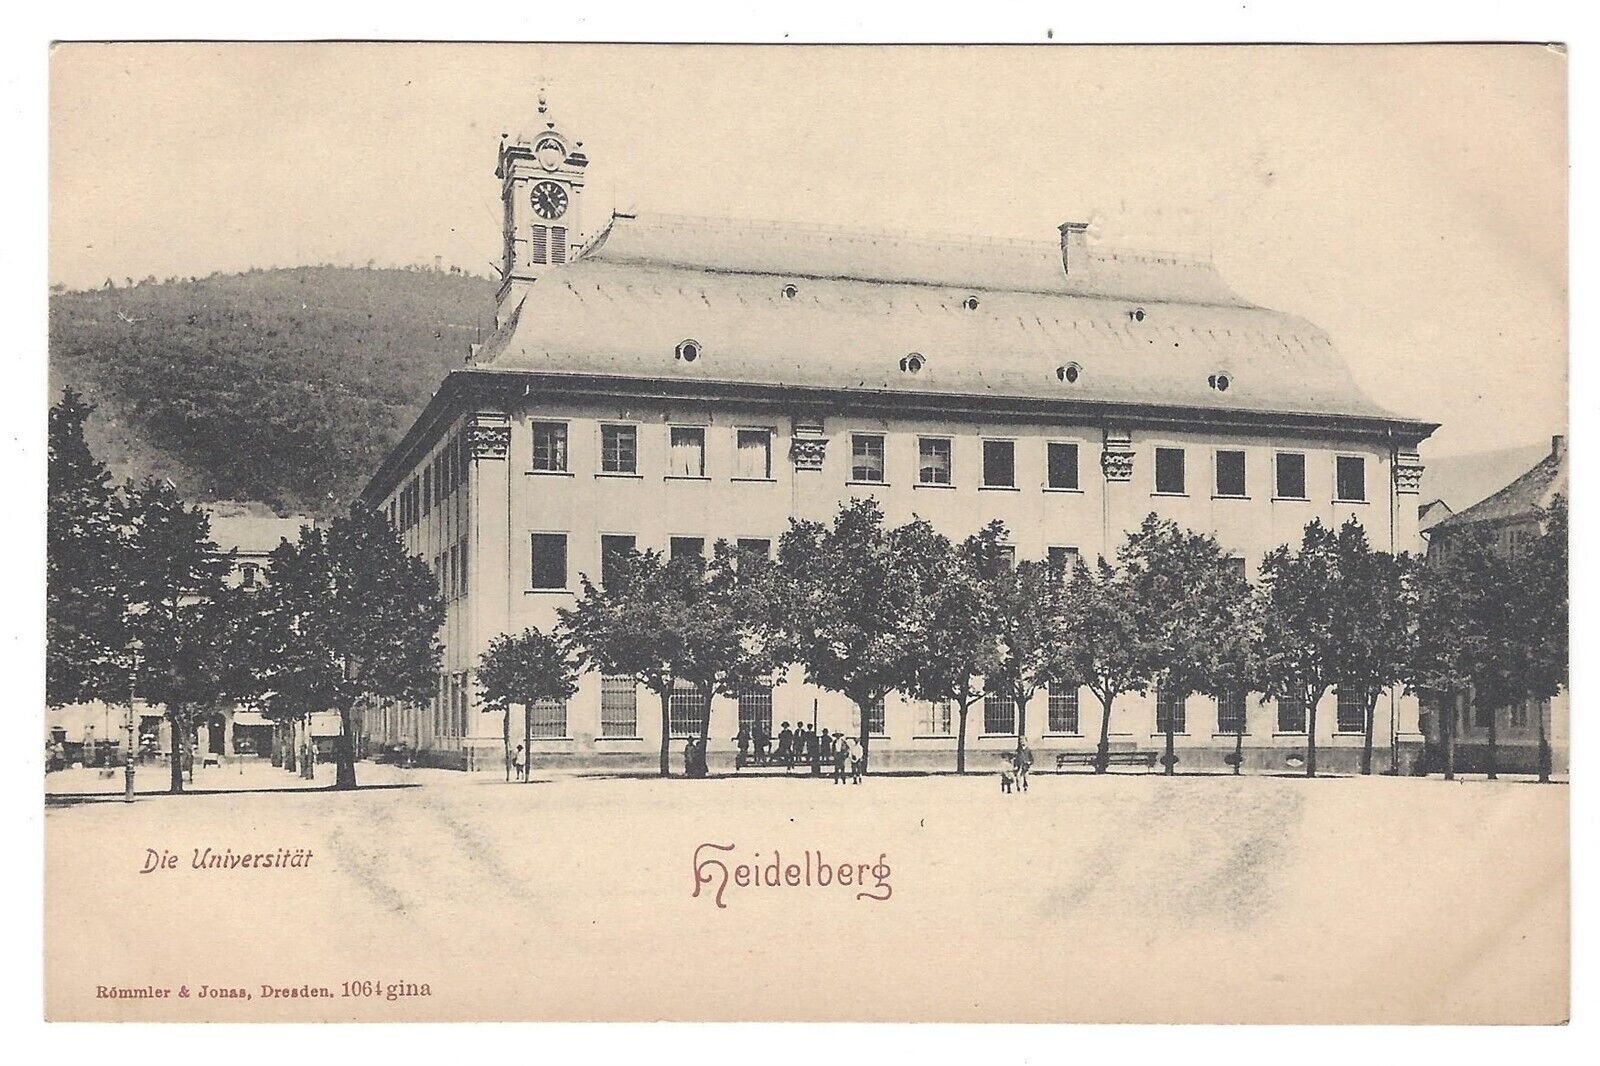 1904 Germany Heidelberg Die Universitat Postkarte